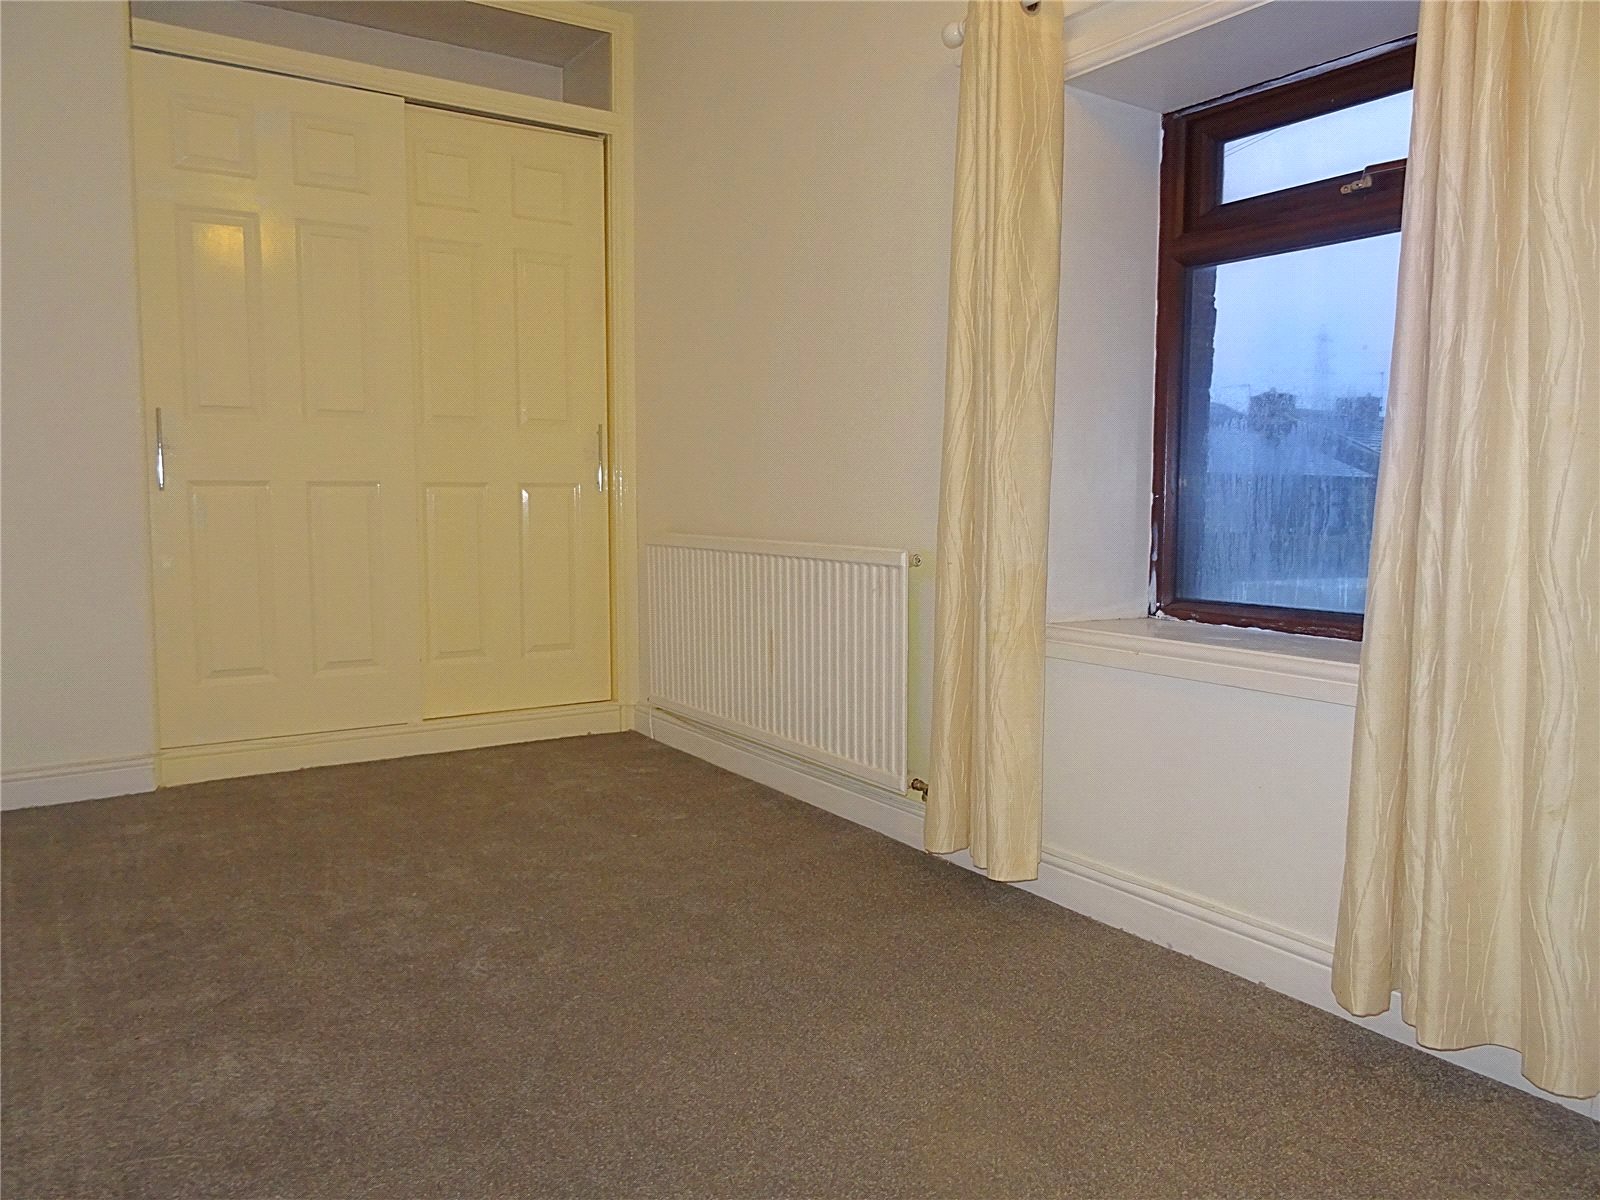 3bedroom Houses For Rent In Queensbury Ny Rentals Com